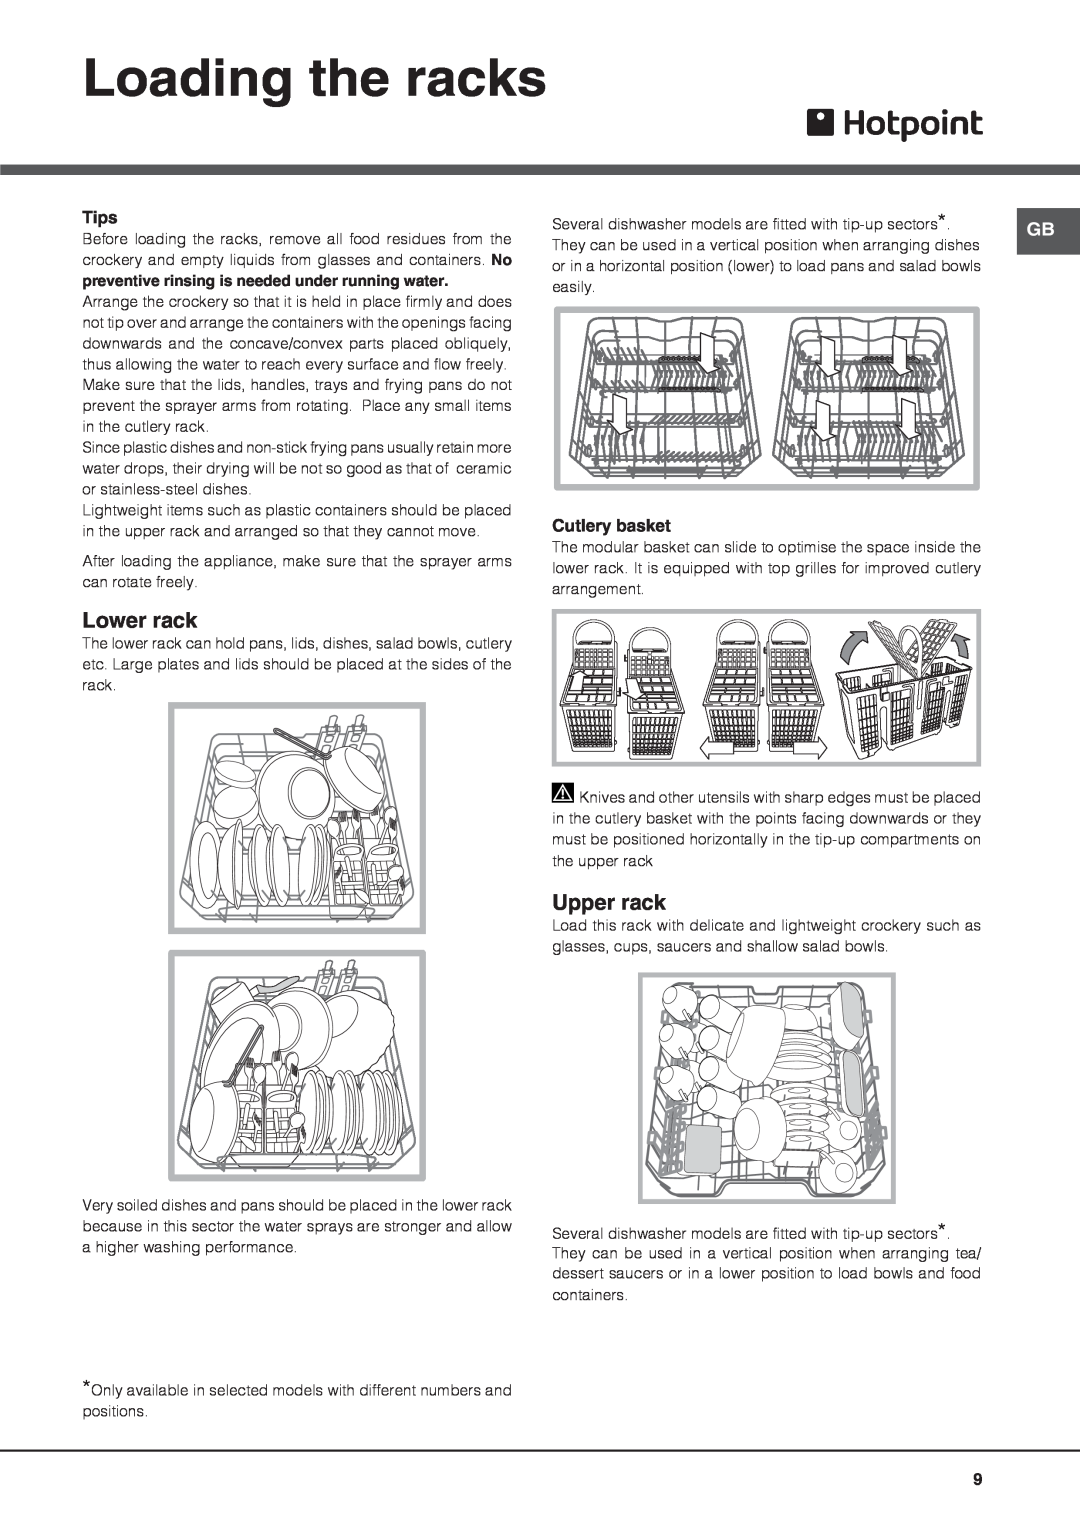 Hotpoint FDUD 43133 Ultima manual Loading the racks, Lower rack, Upper rack, Tips, Cutlery basket 